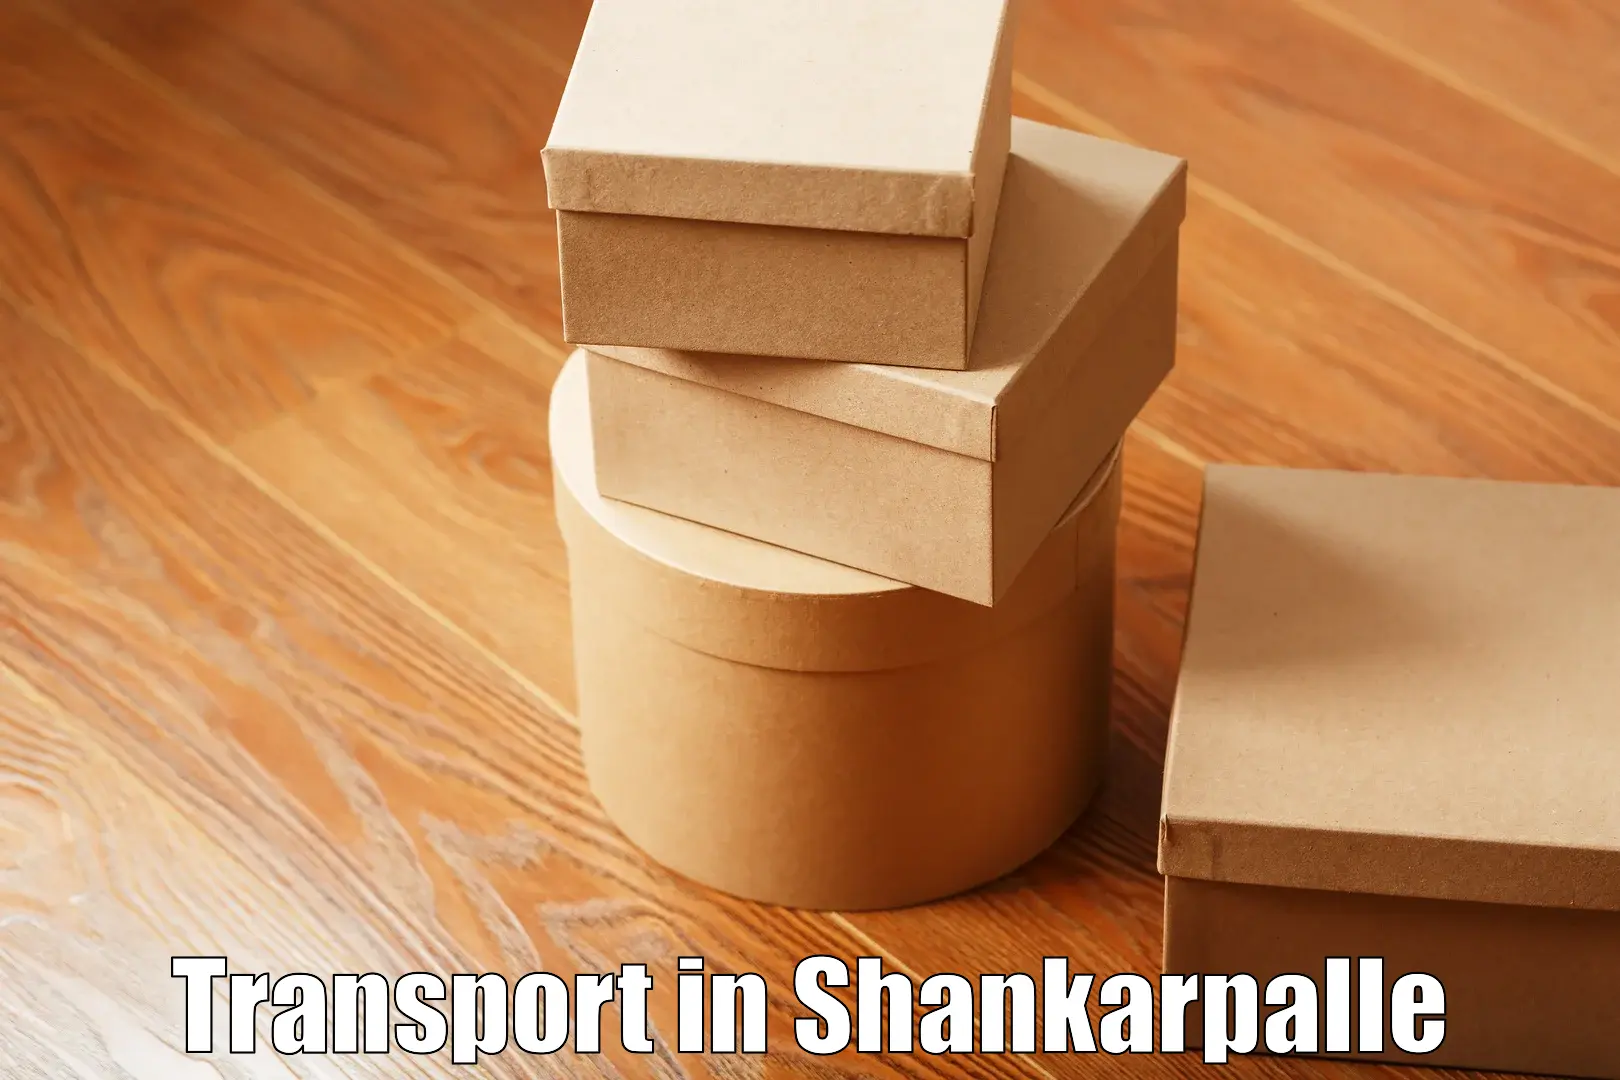 Road transport online services in Shankarpalle